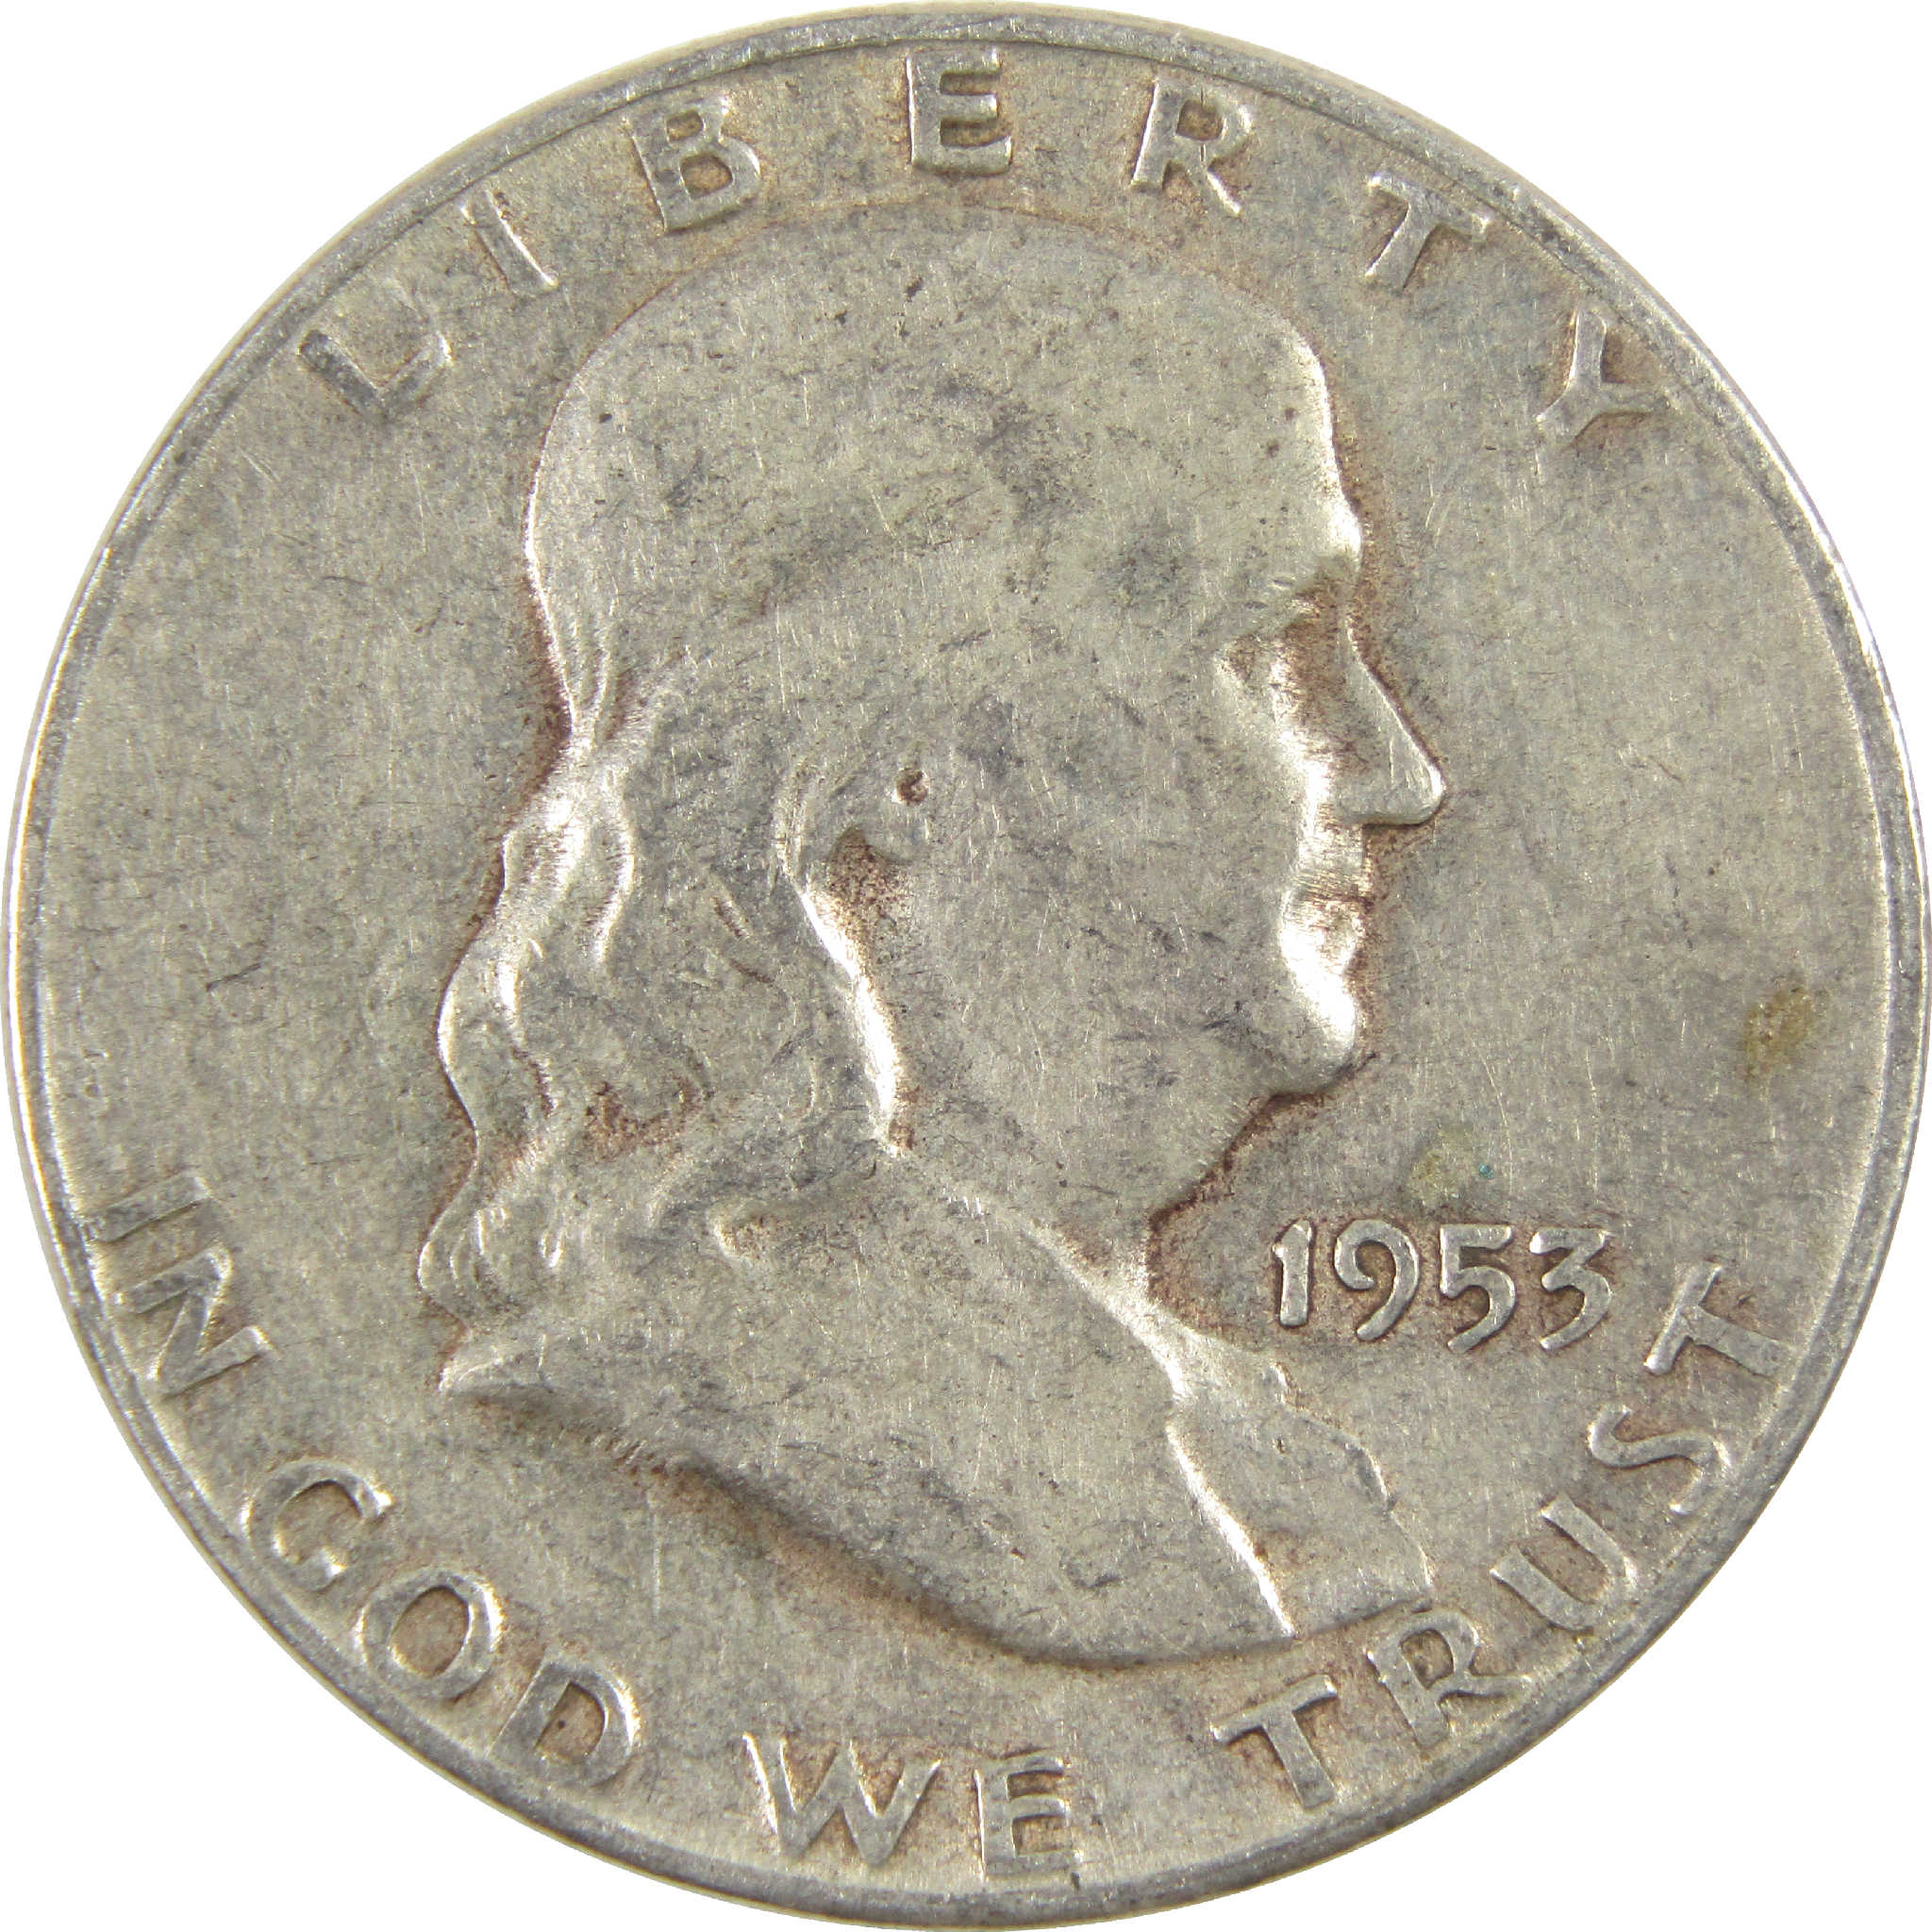 1953 S Franklin Half Dollar VG Very Good Silver 50c Coin